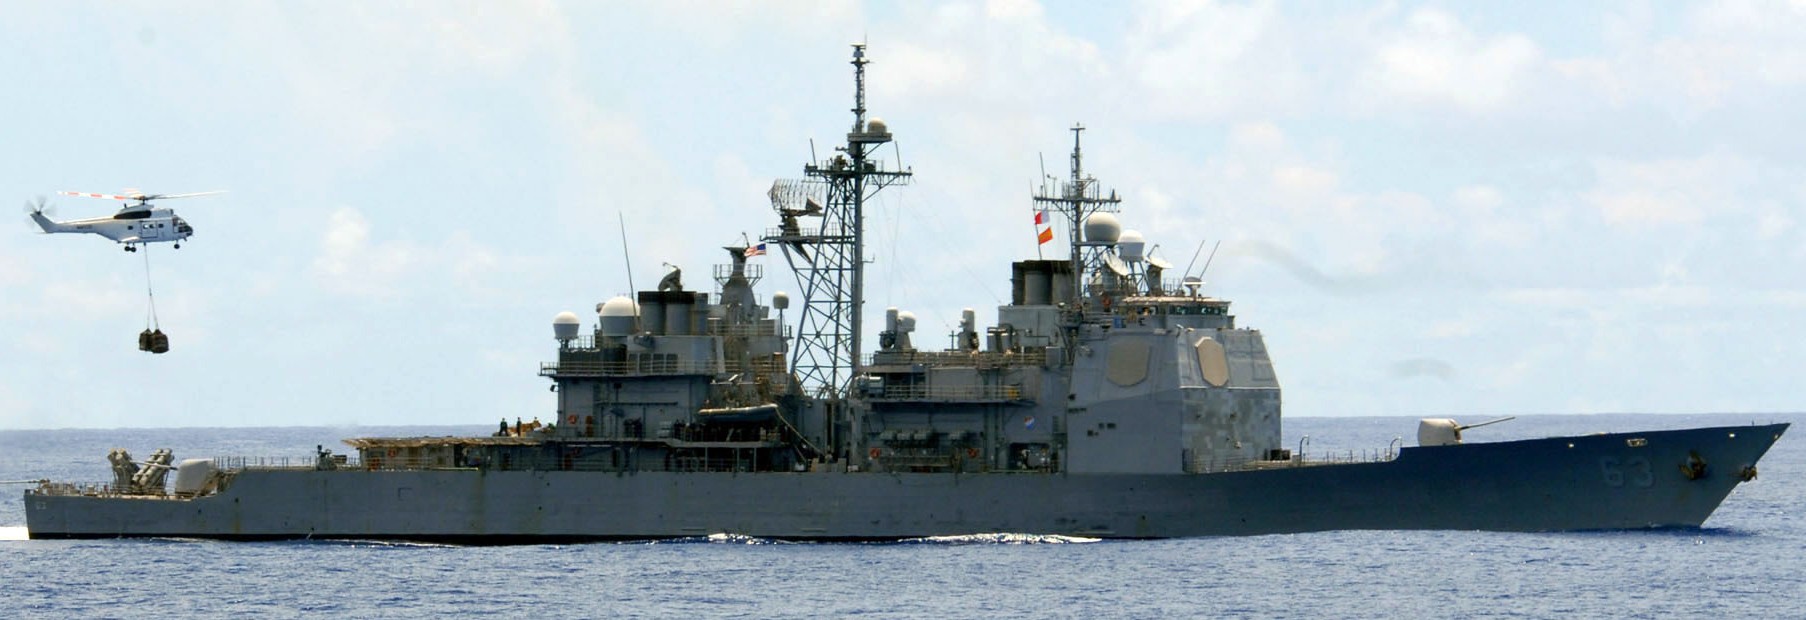 cg-63 uss cowpens ticonderoga class guided missile cruiser aegis us navy 30